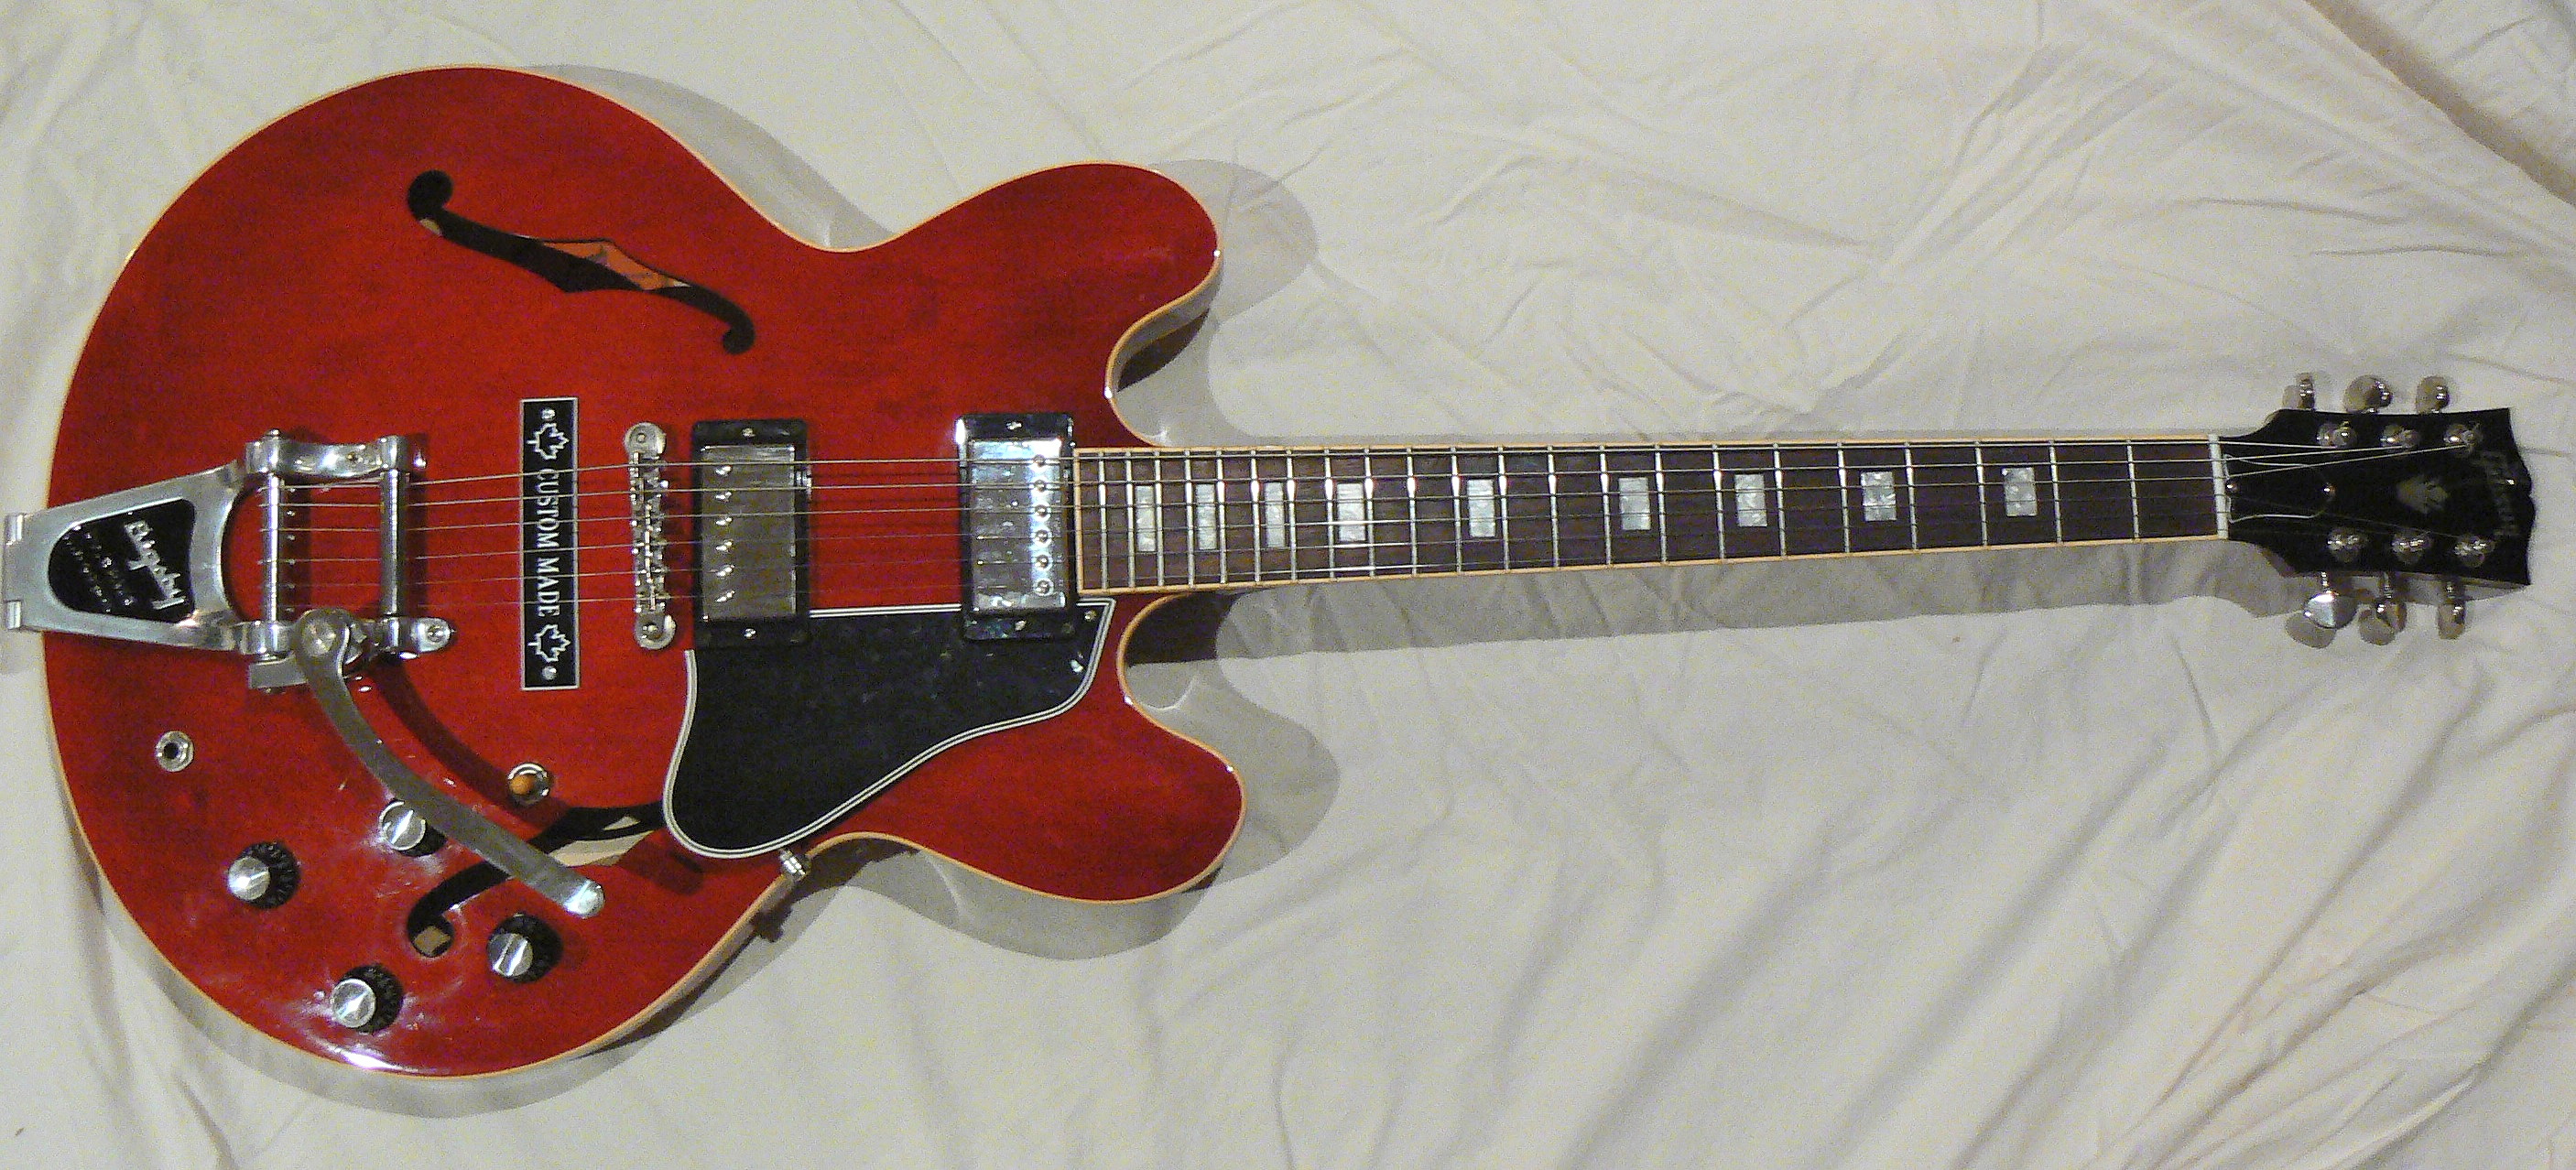 Gibson ES-335 guitar, music lessons